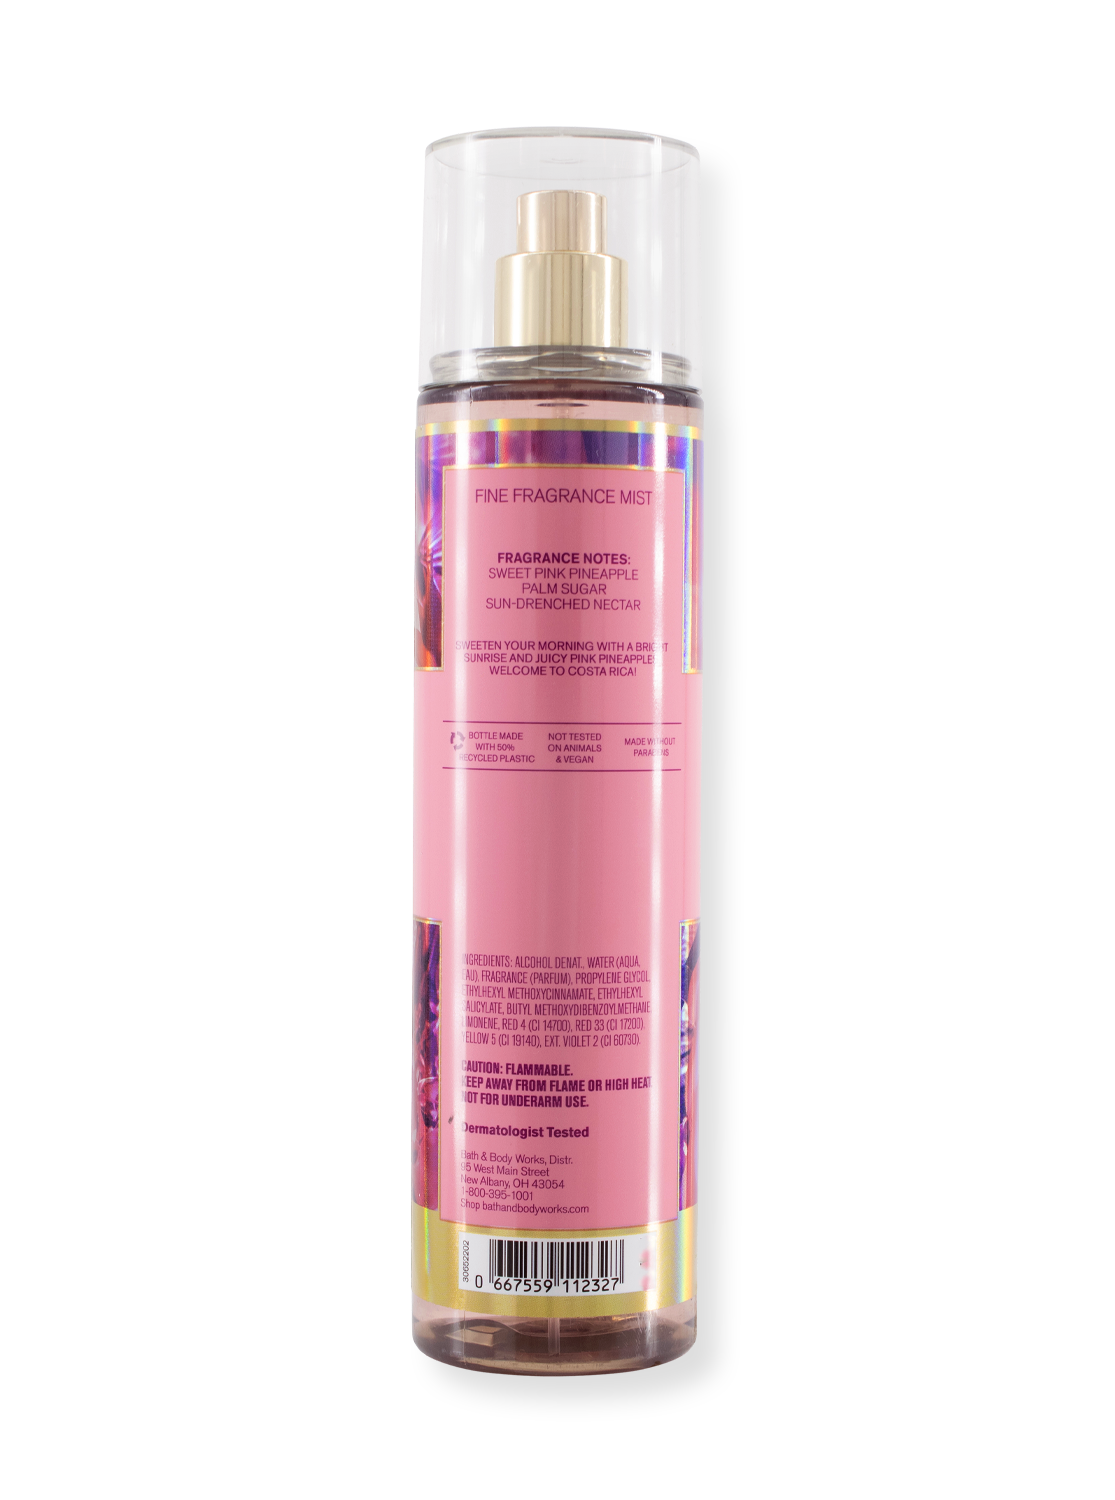 Body Spray - Costa Rica - Roze ananas zonsopgang - 236 ml